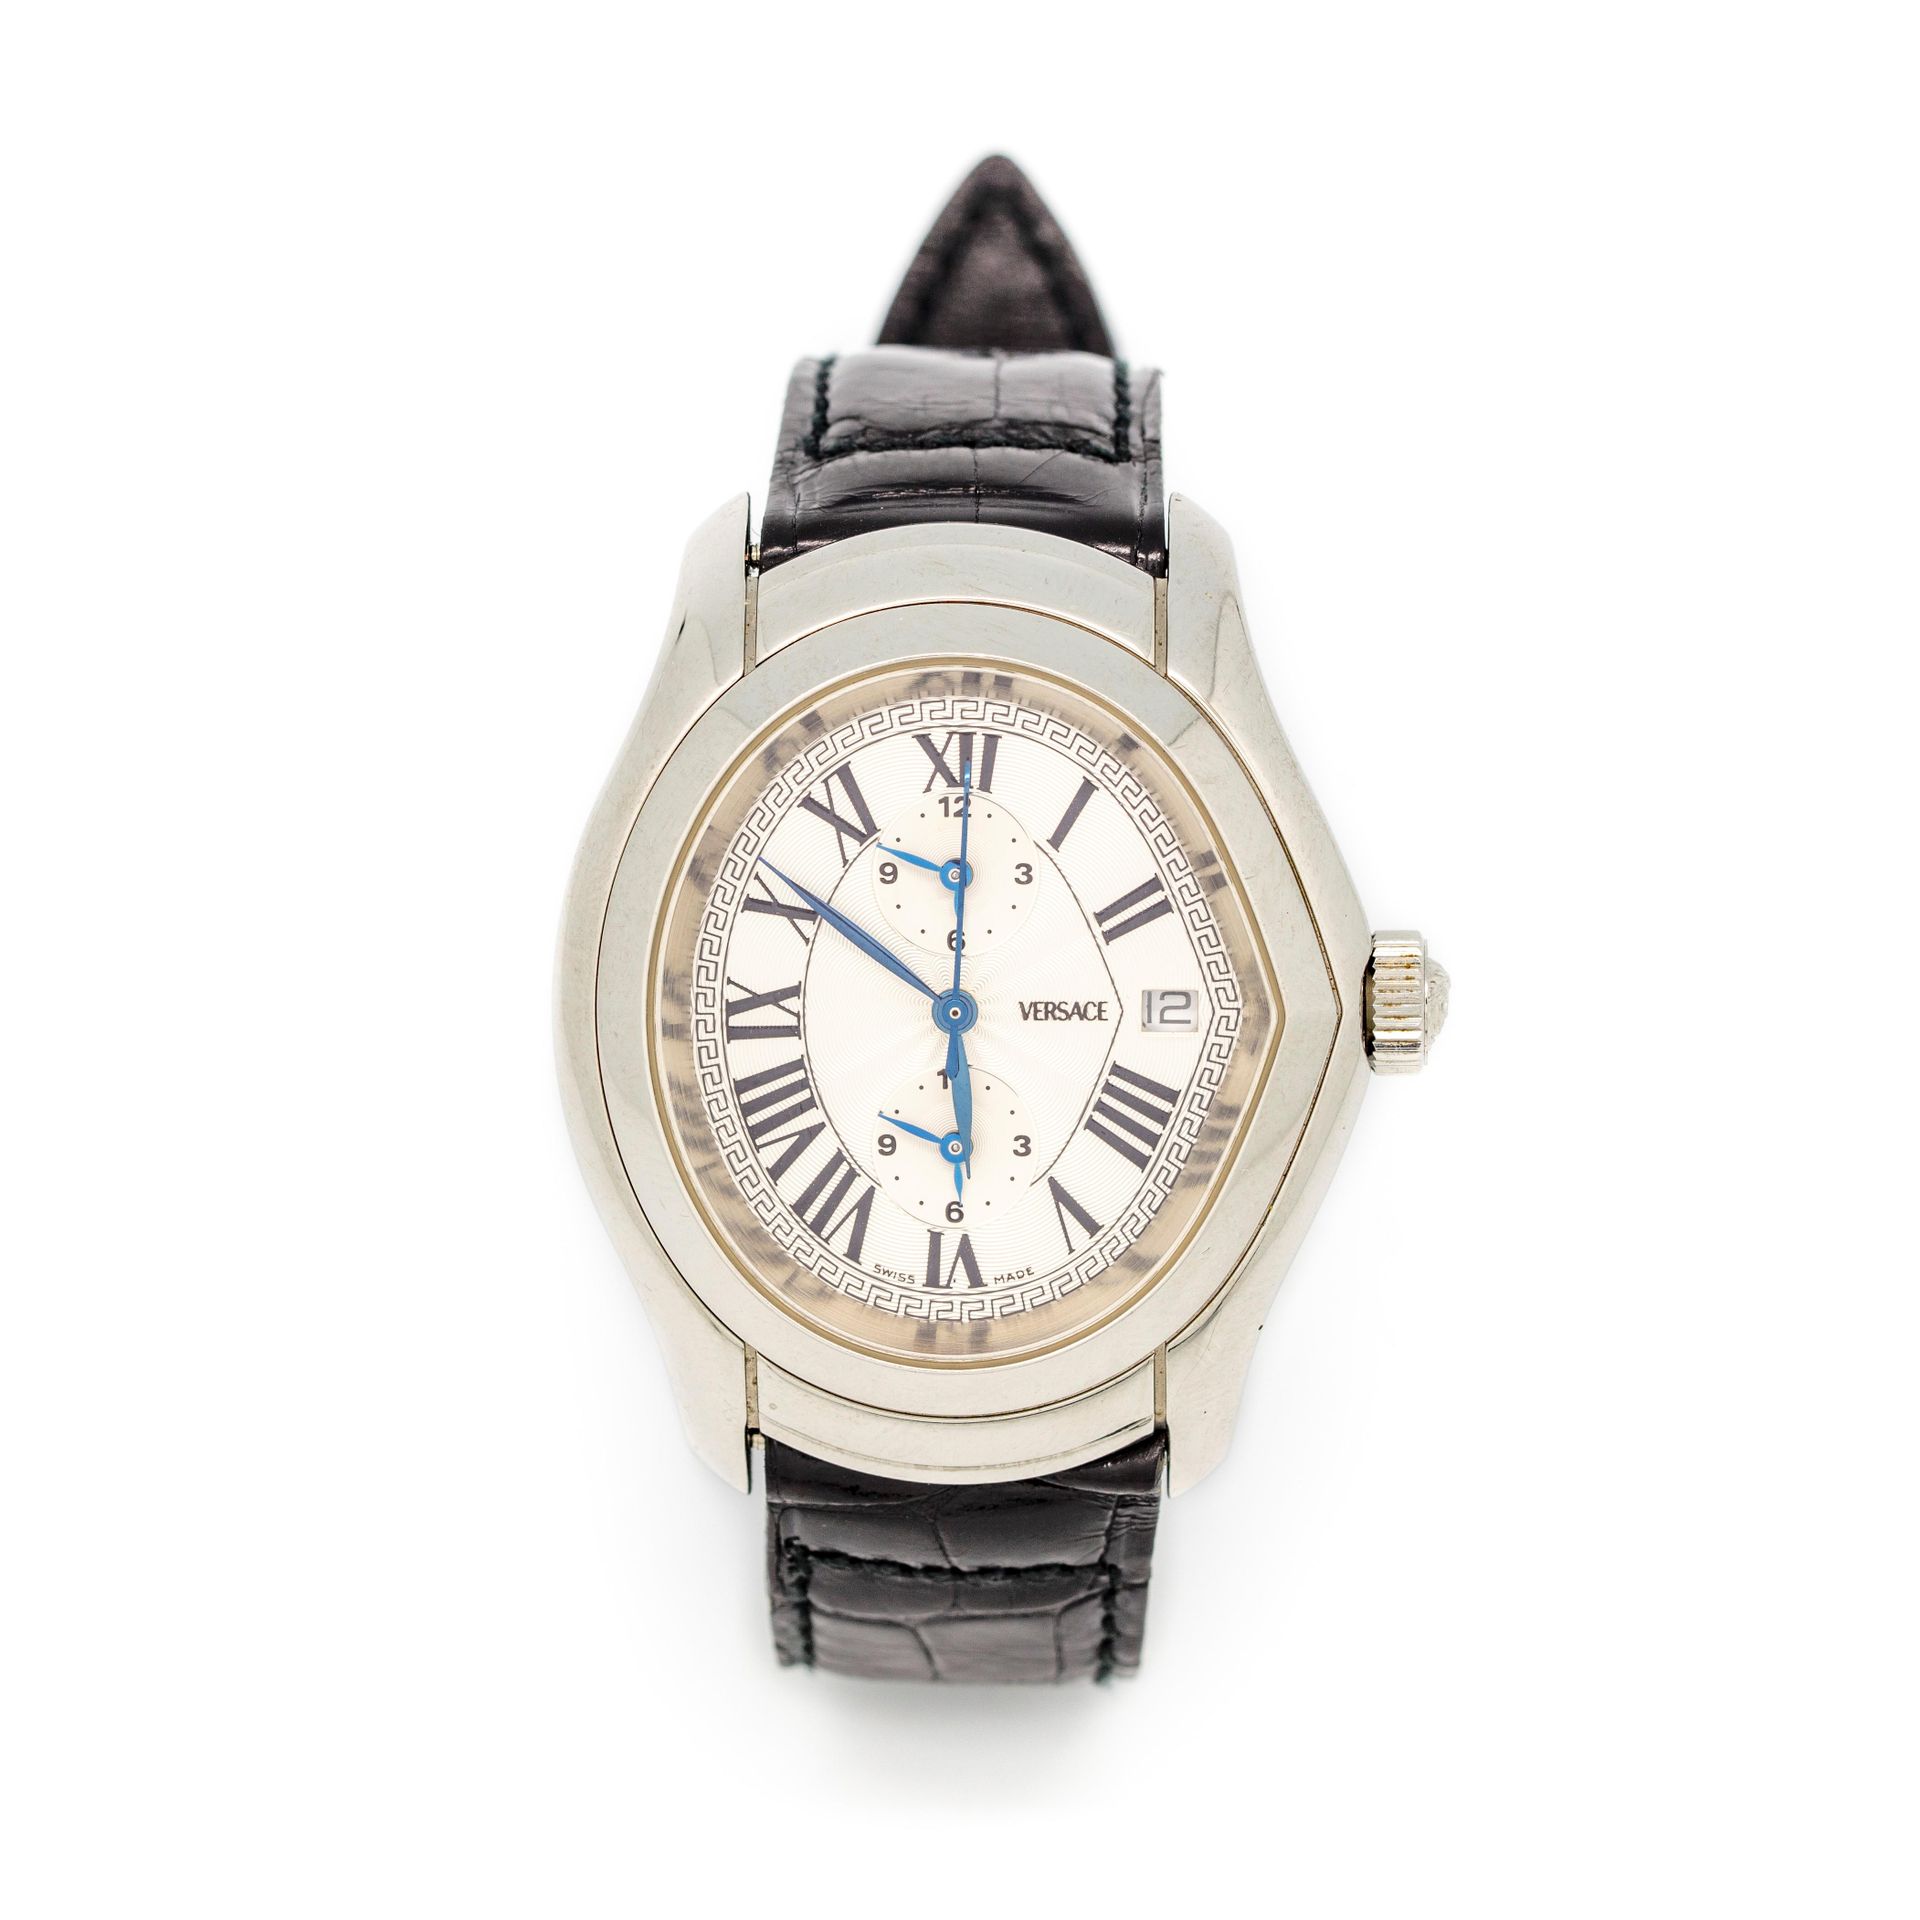 VERSACE Gianni VERSACE

Montre bracelet Chronographe en acier n° 076/250 - Cadra&hellip;